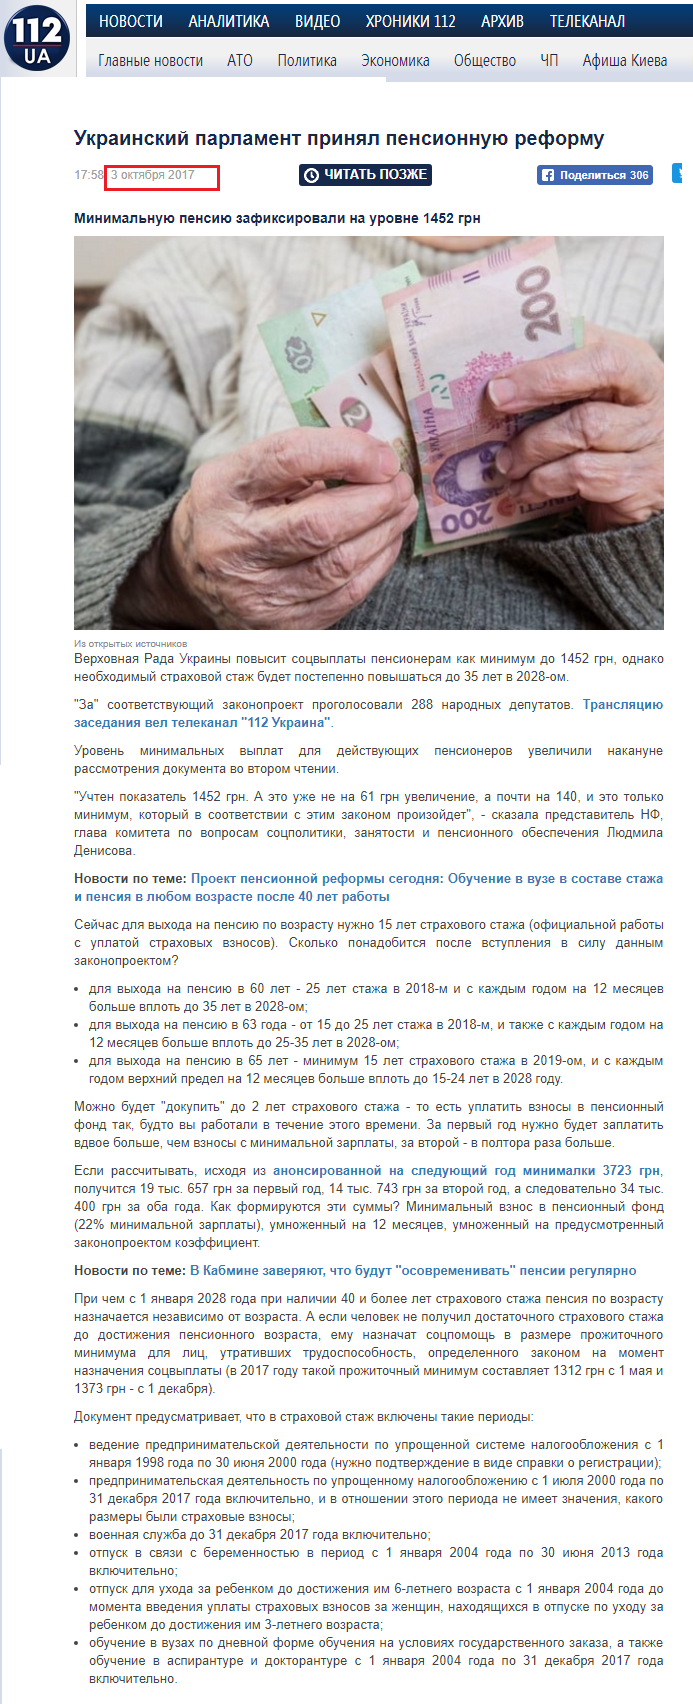 https://112.ua/politika/ukrainskiy-parlament-prinyal-pensionnuyu-reformu-414211.html